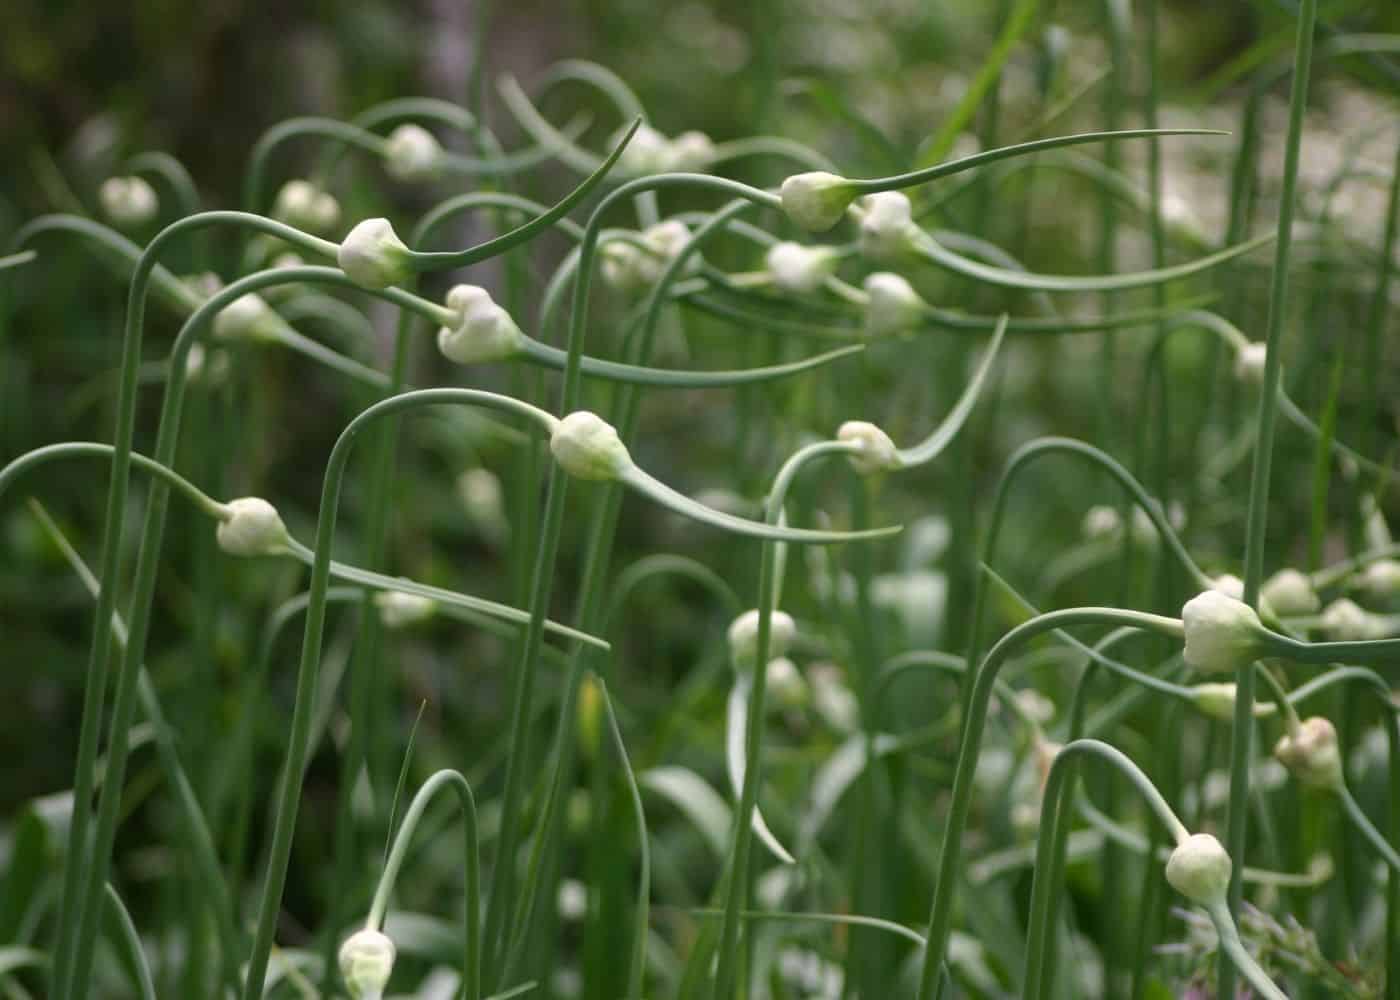 Garlic - companion plants for potatoes